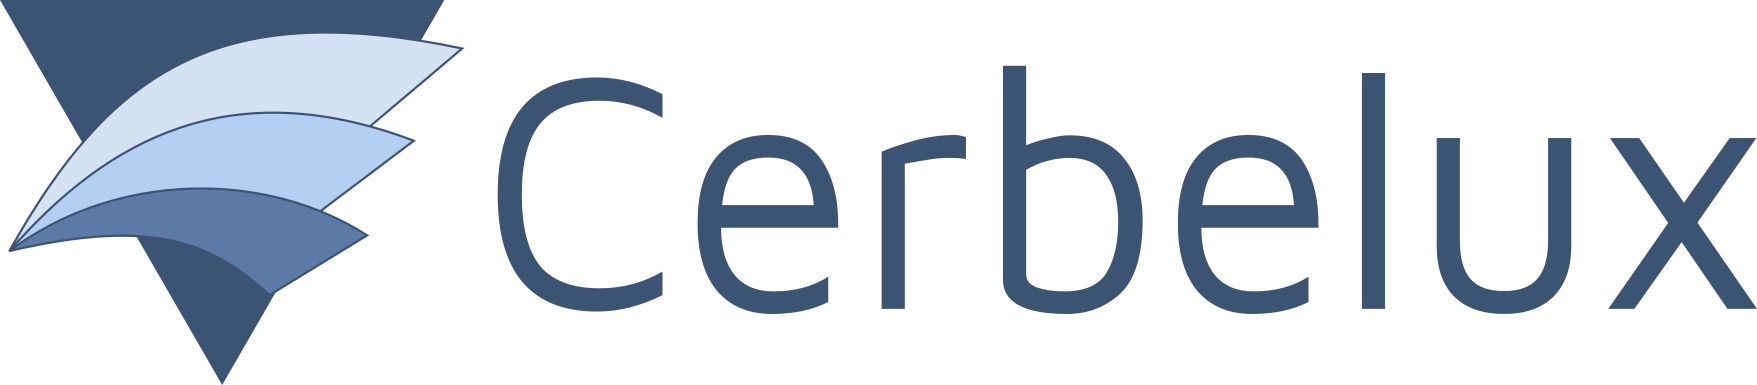 Cerbelux logo color main text